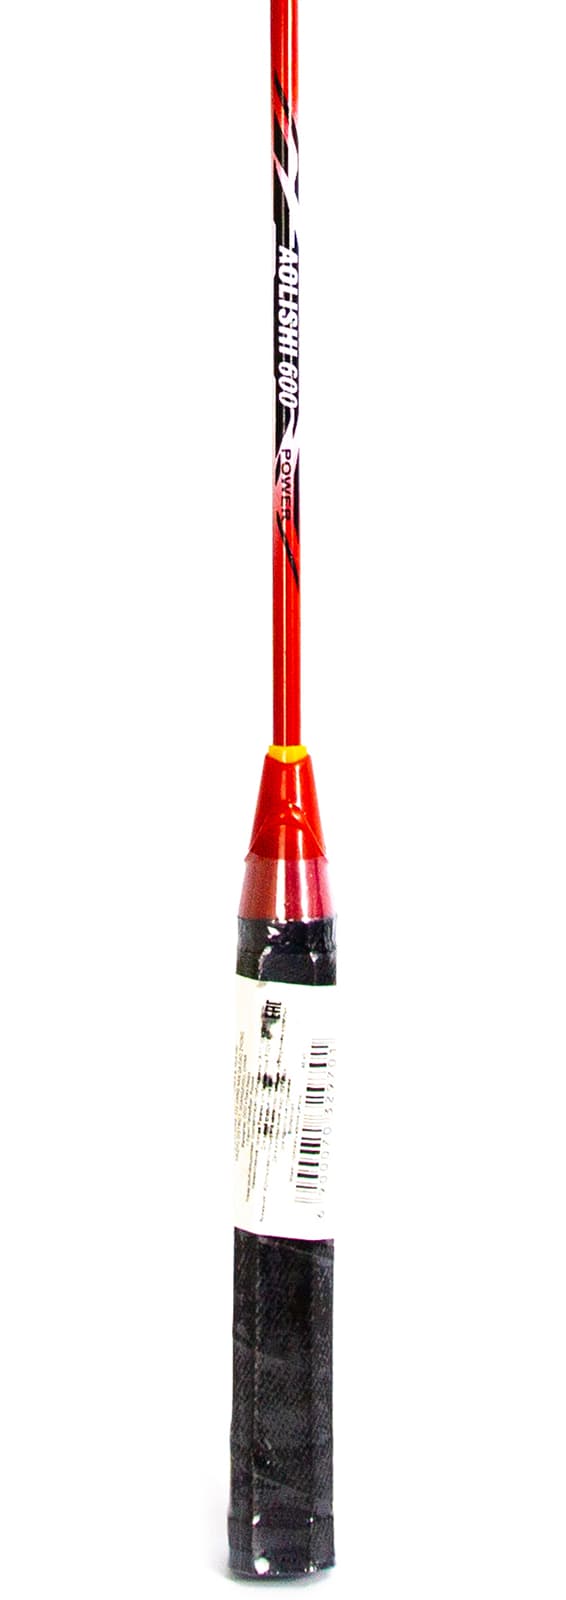 Ракетки для бадминтона Aolishi 600 Power в чехле, 32970 / микс